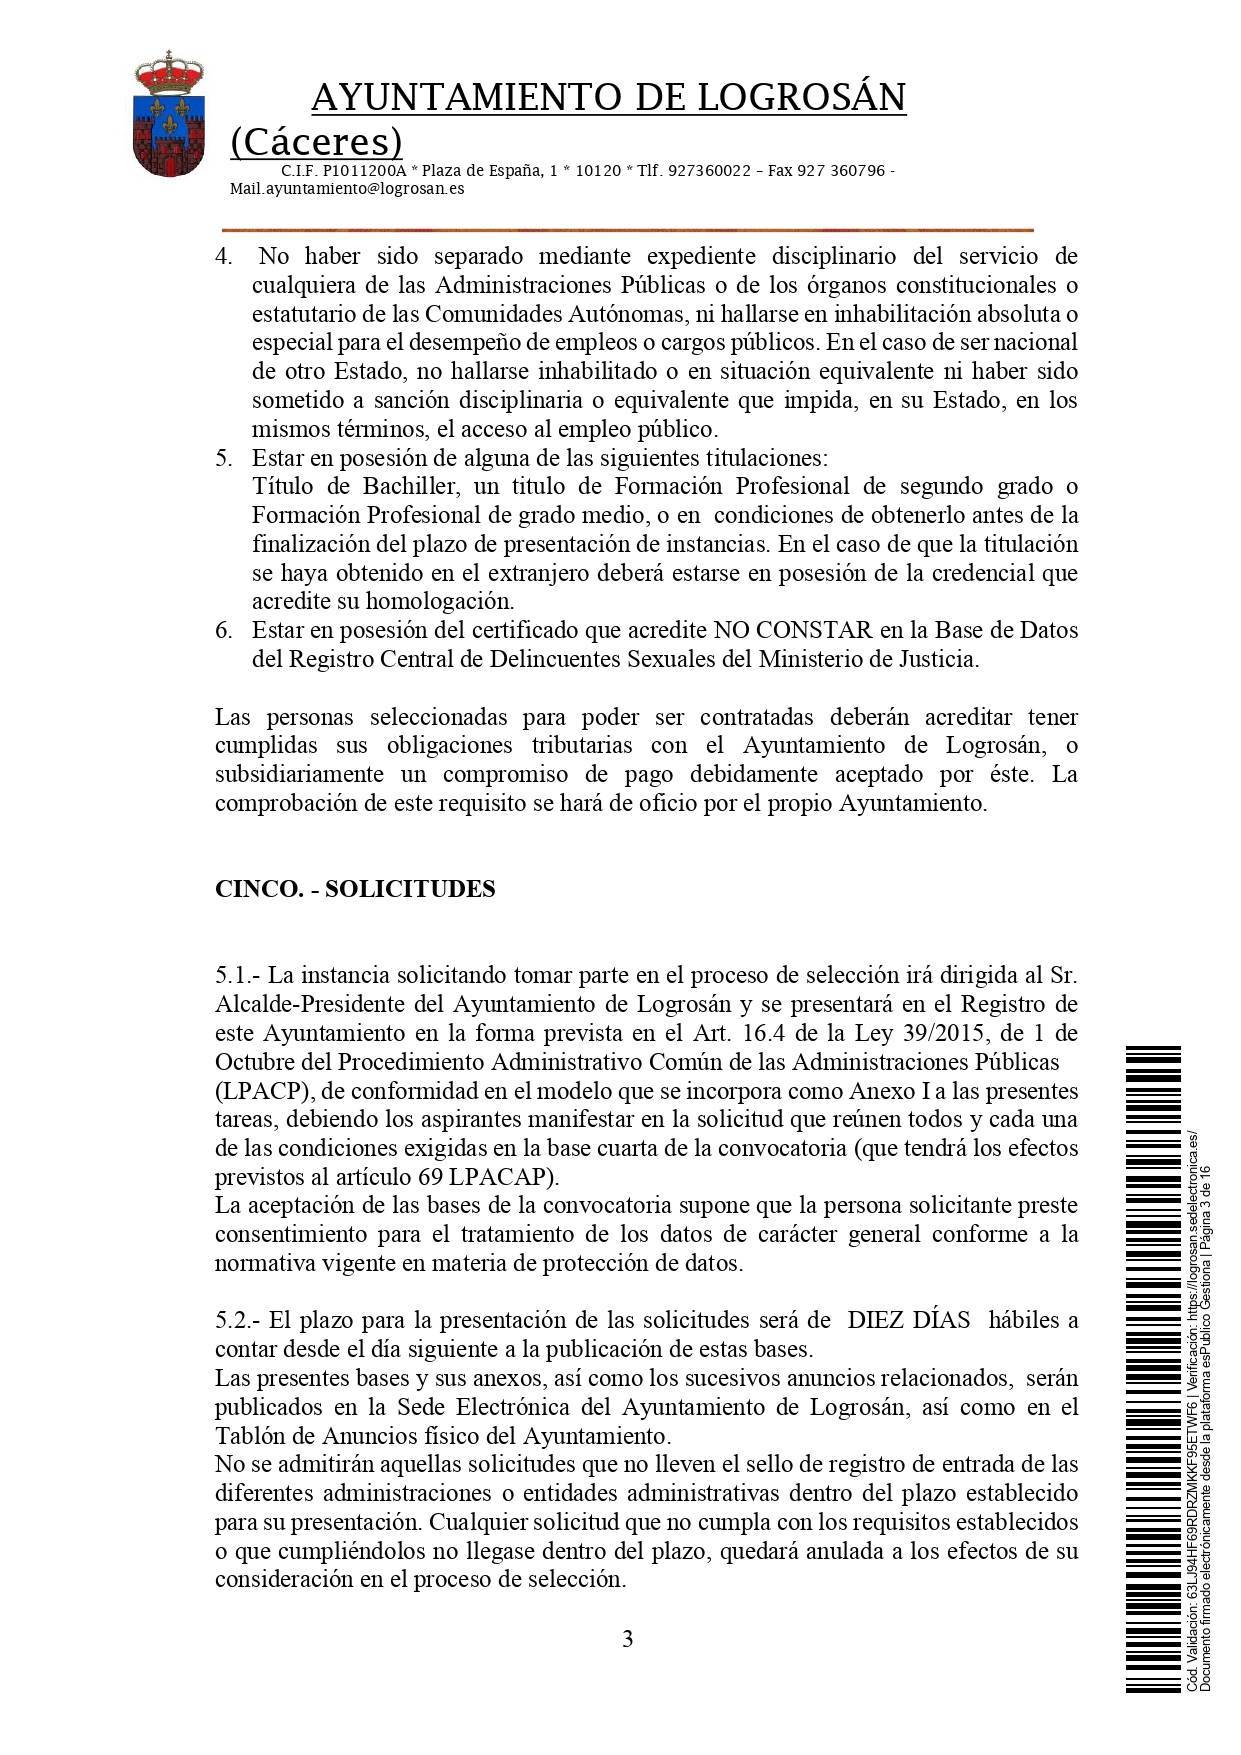 Técnicos-as auxiliar de biblioteca y dinamizador-a cultural (2021) - Logrosán (Cáceres) 3